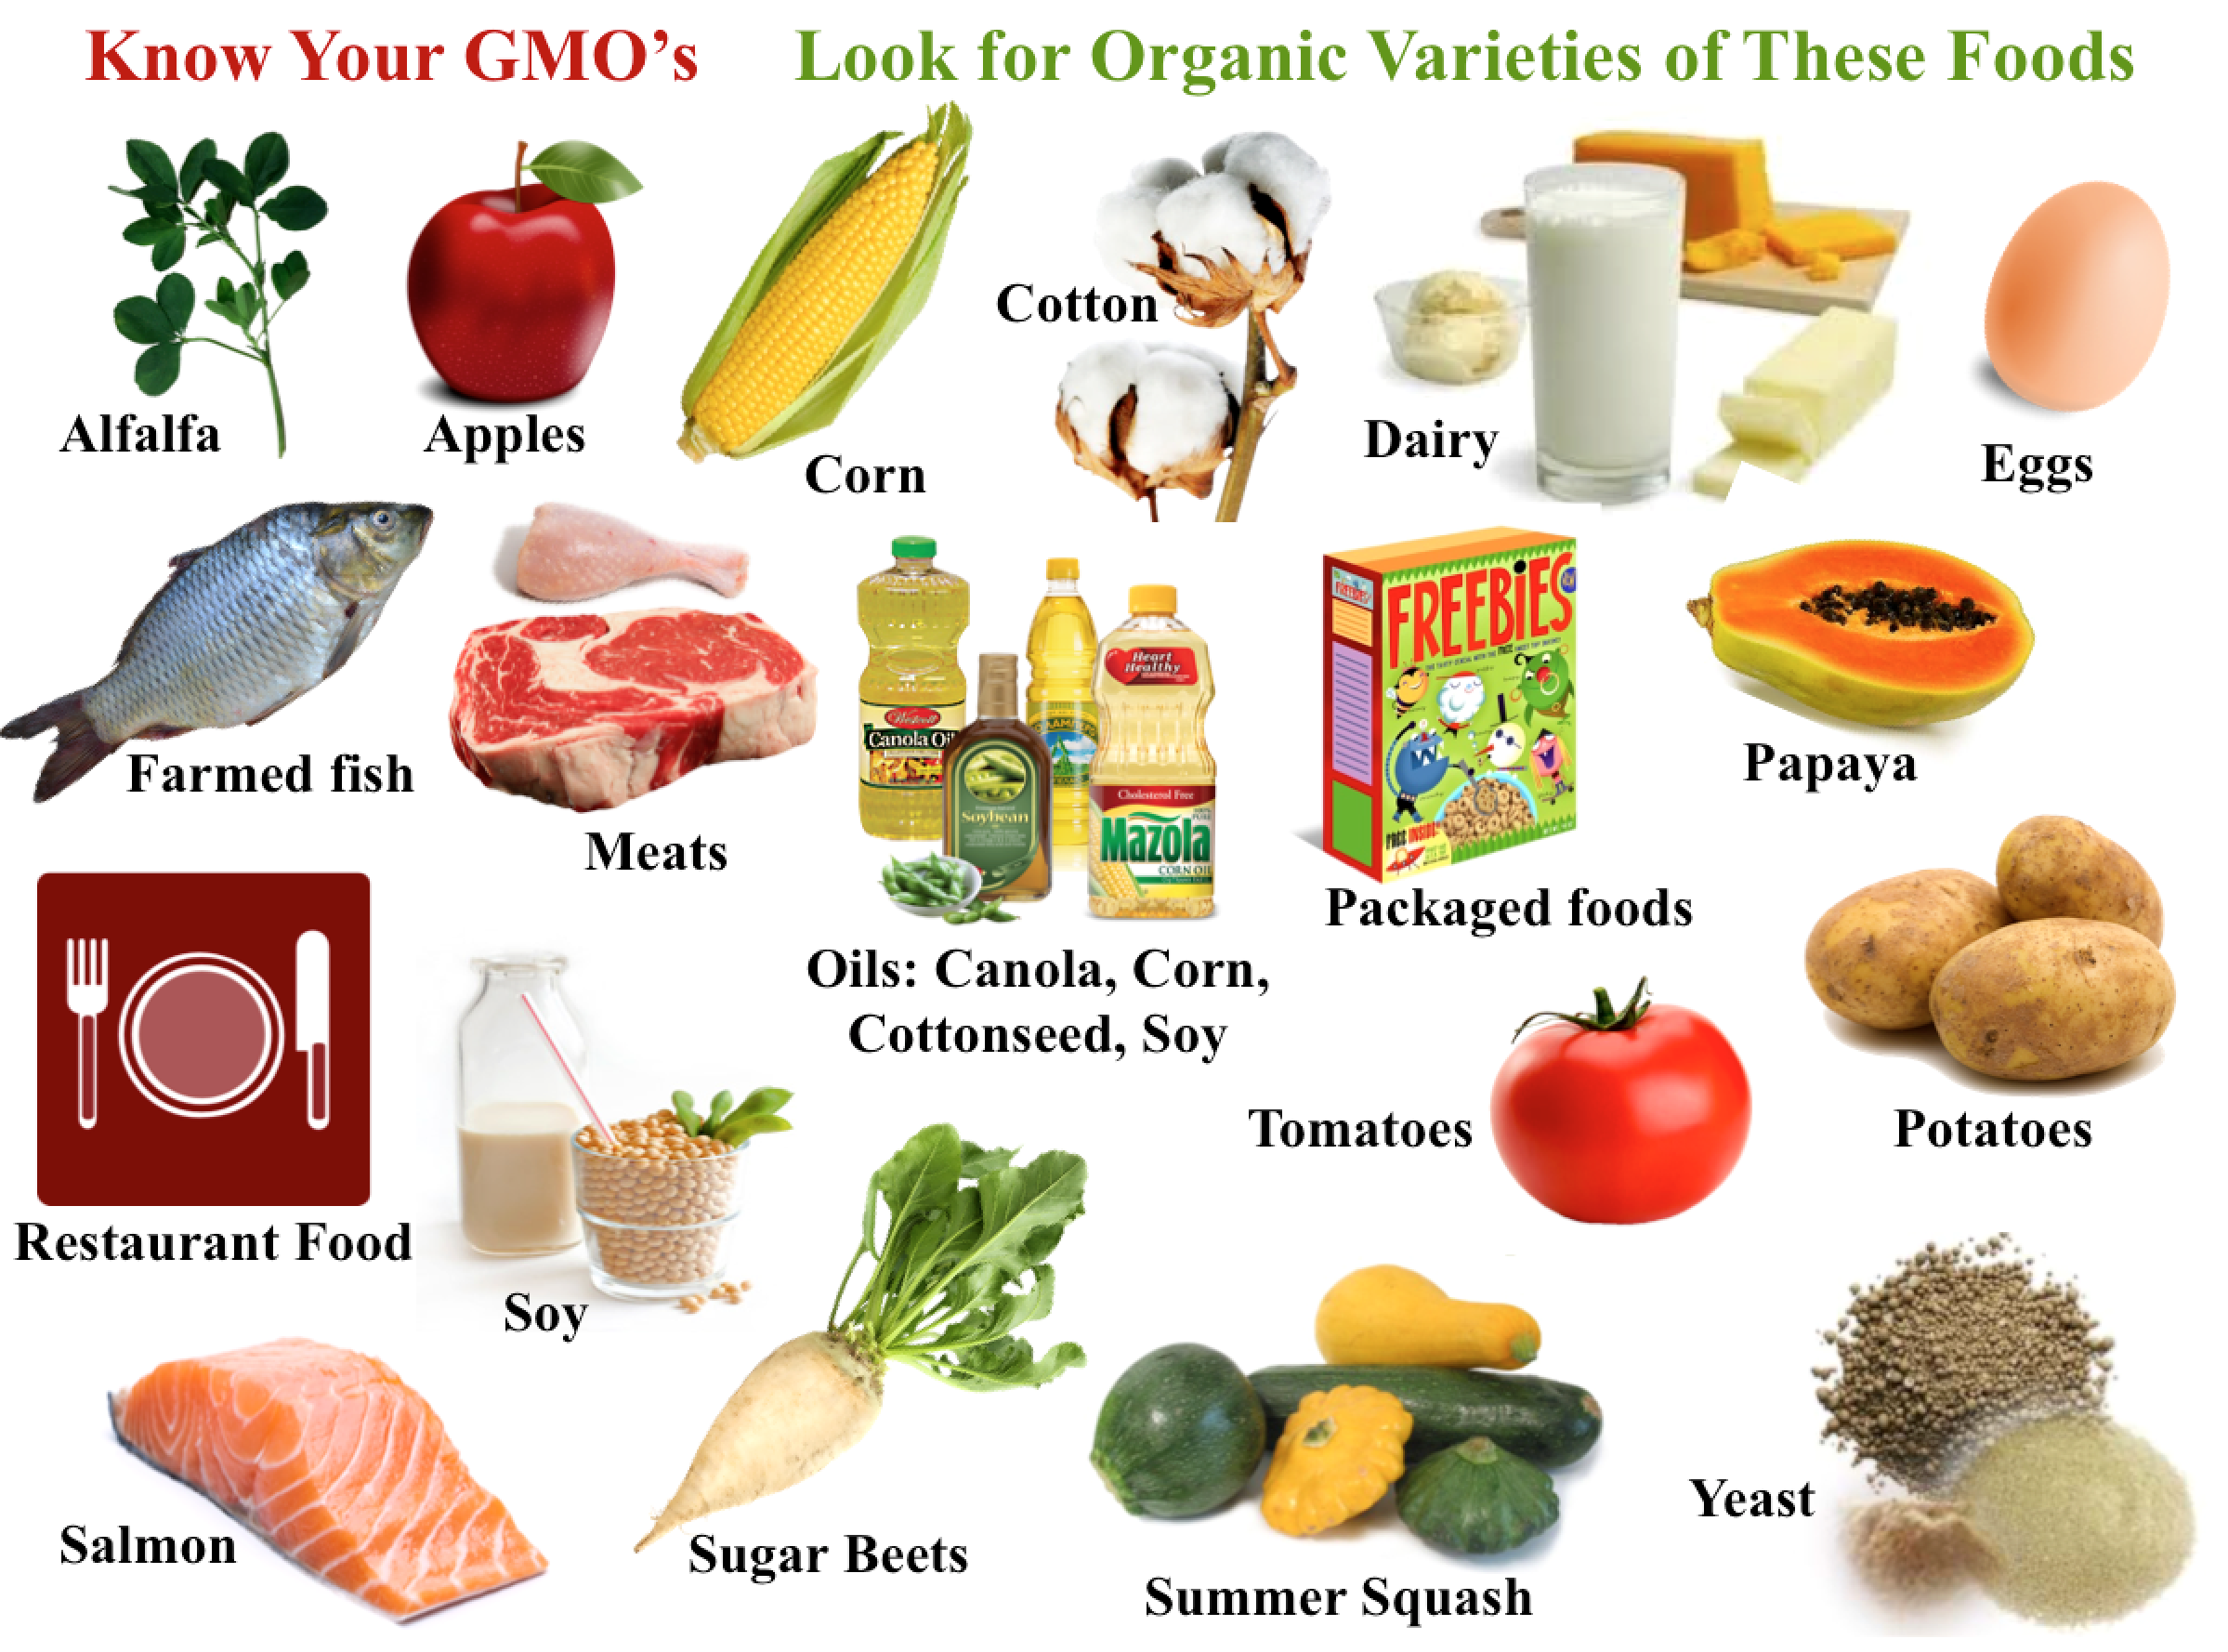 Warning! GMOFree Foods Contain Glyphosate Jane's Healthy Kitchen